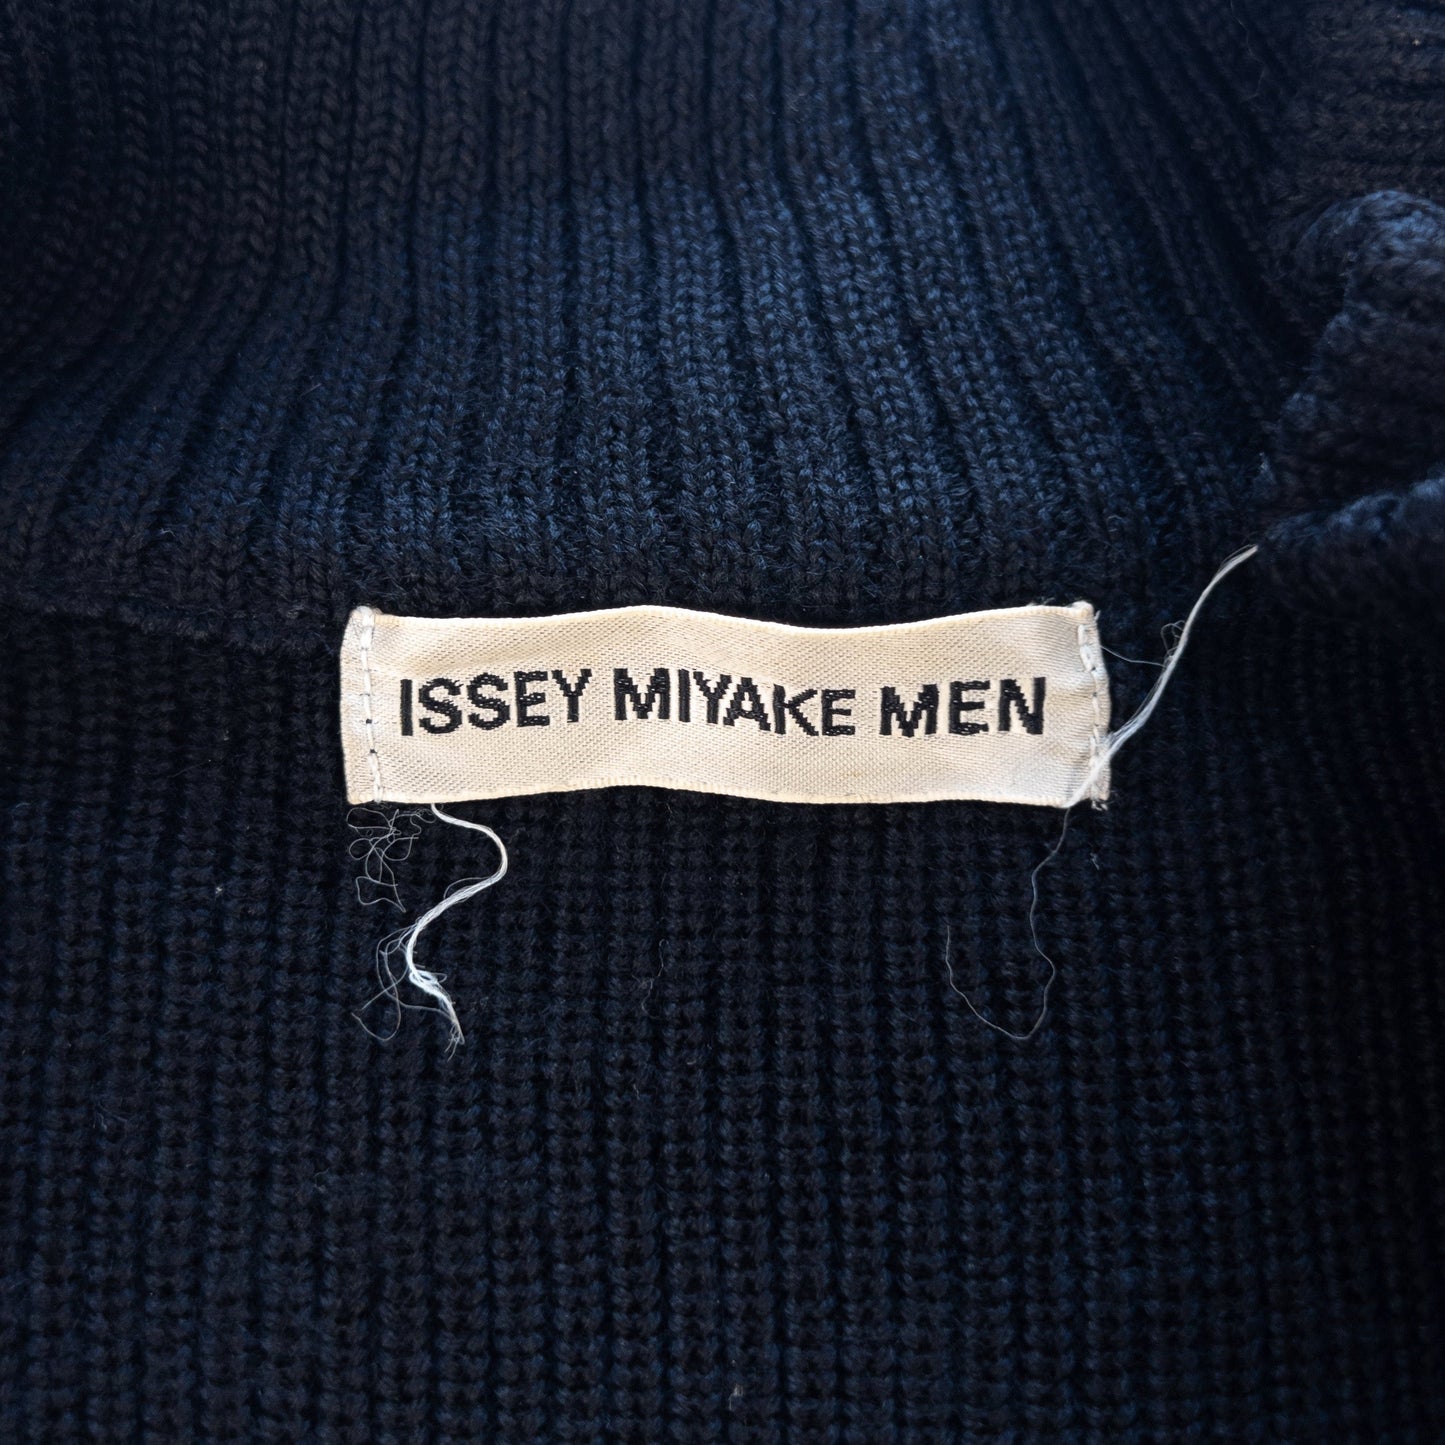 Vintage Issey Miyake Gilet Size S